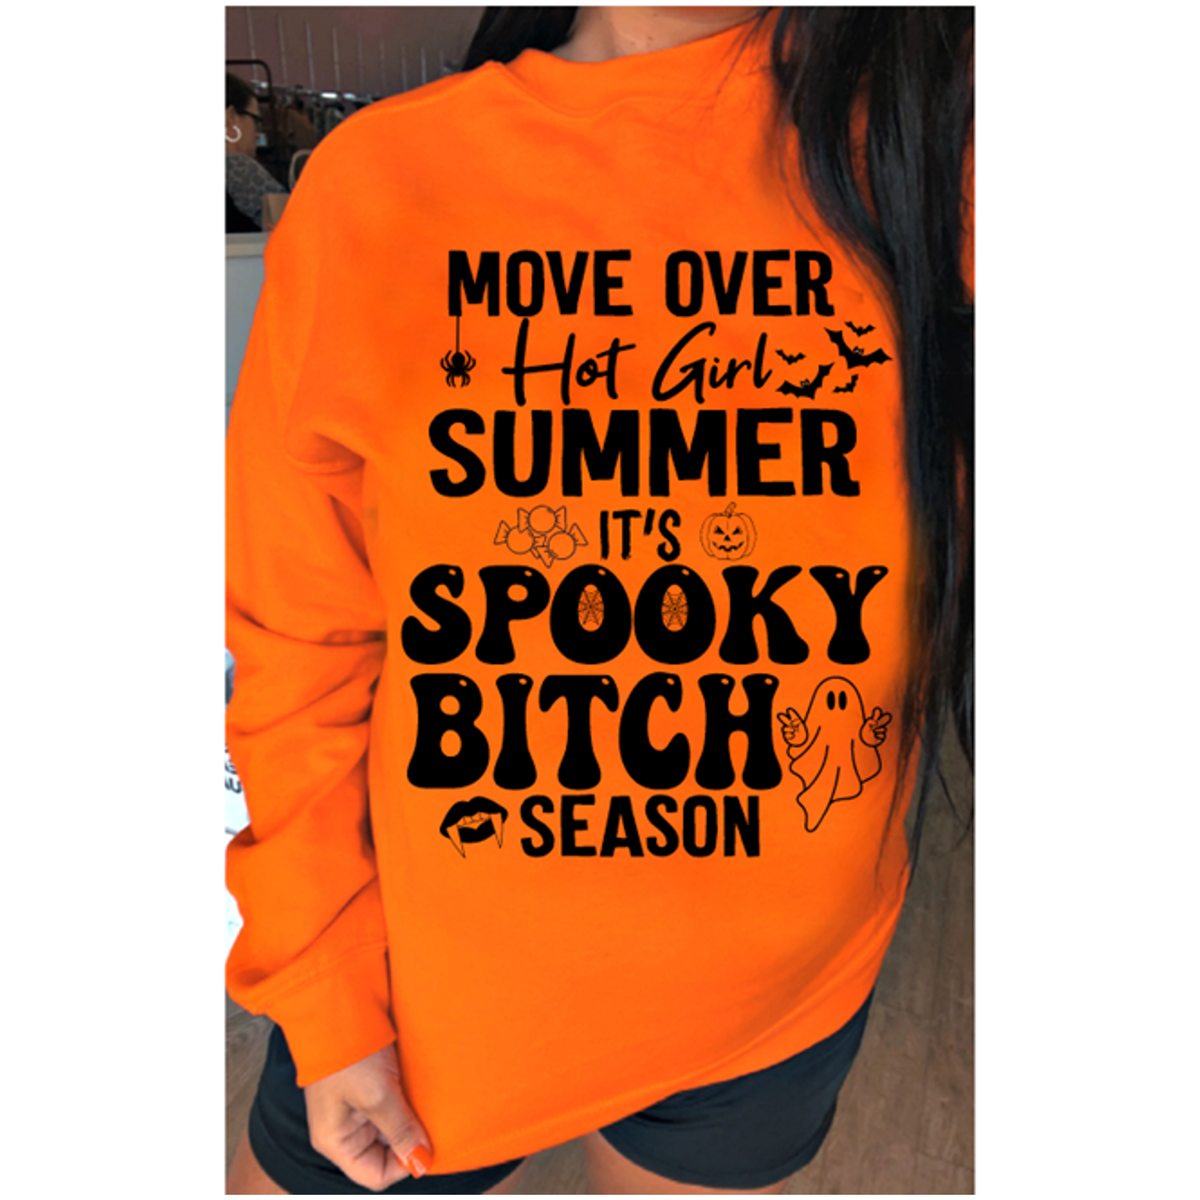 Spooky Bitch Season Sweatshirt or Tee